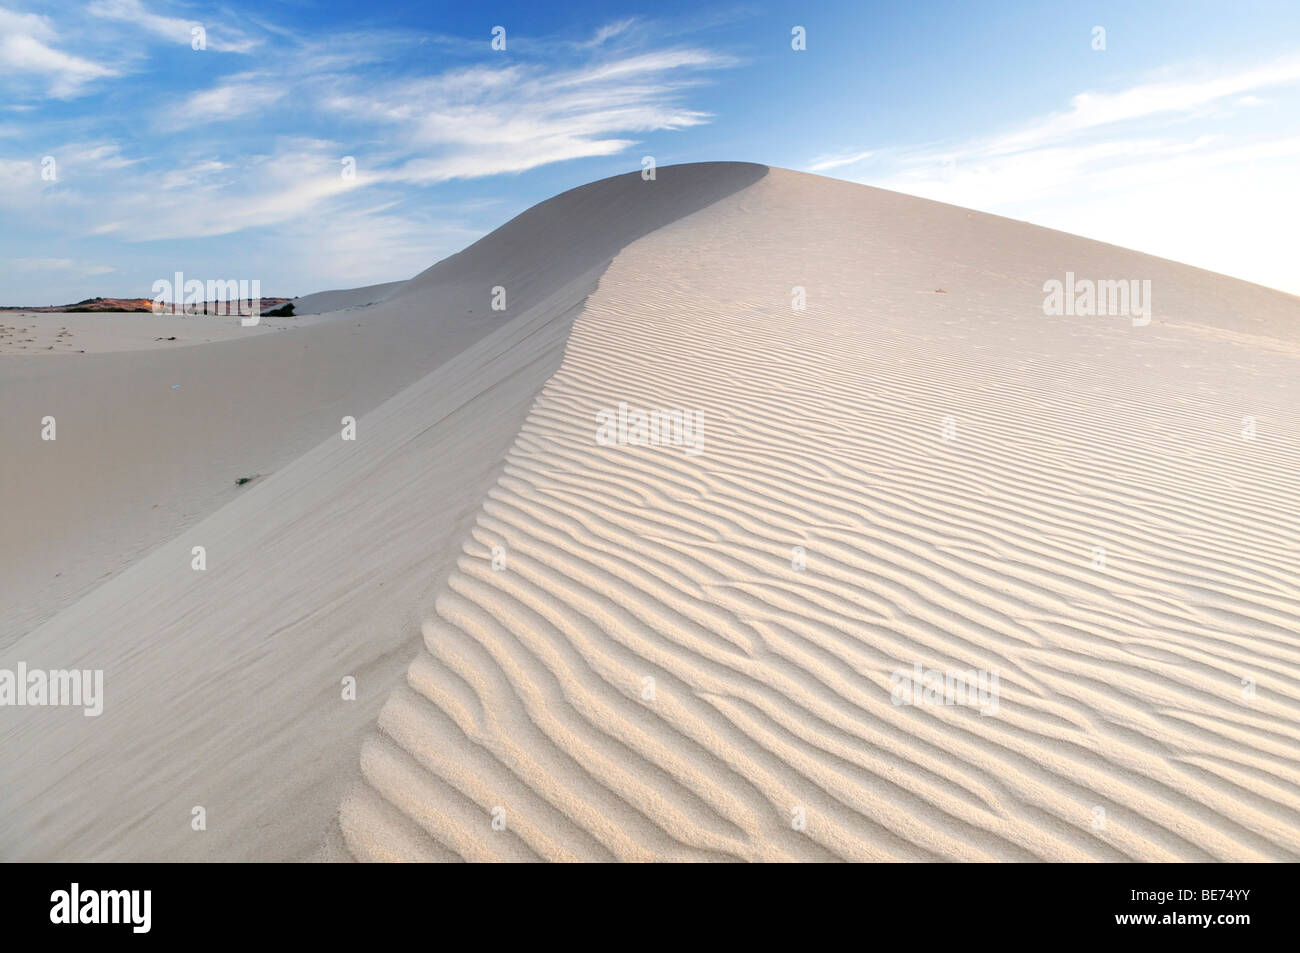 Desert landscape and White Sand Dune, Bau Ba 'Vietnamese Sahara', Bao Trang, White Lake, Vietnam, Asia Stock Photo